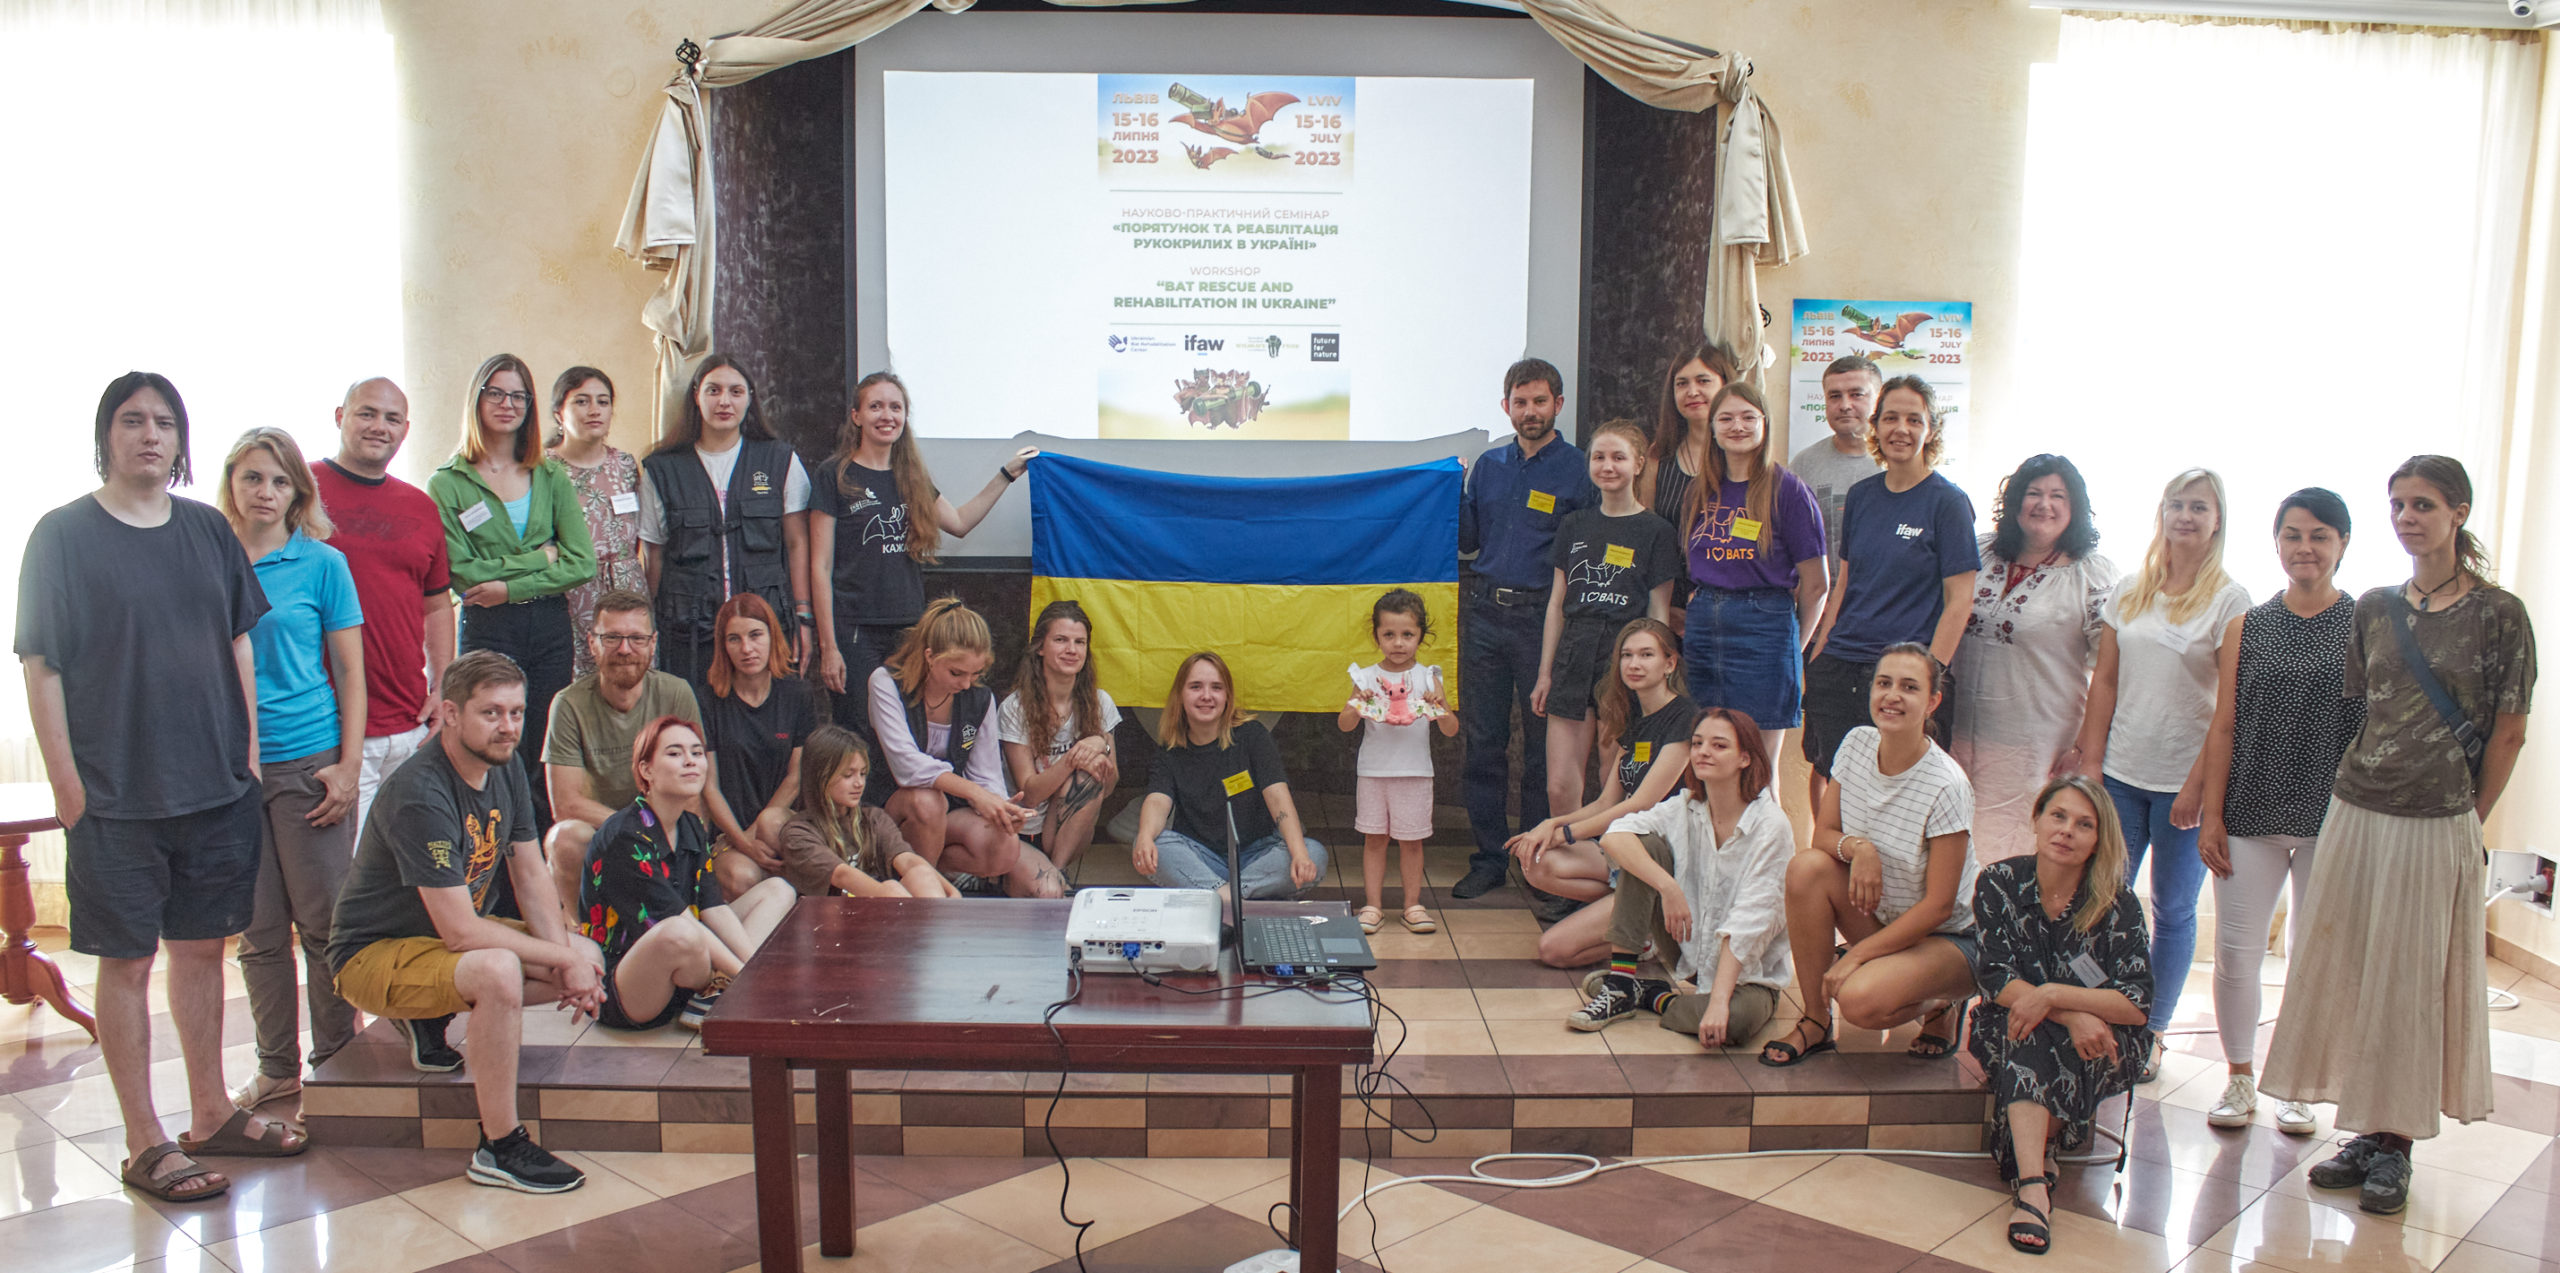 Workshop “Bat Rescue and Rehabilitation in Ukraine”